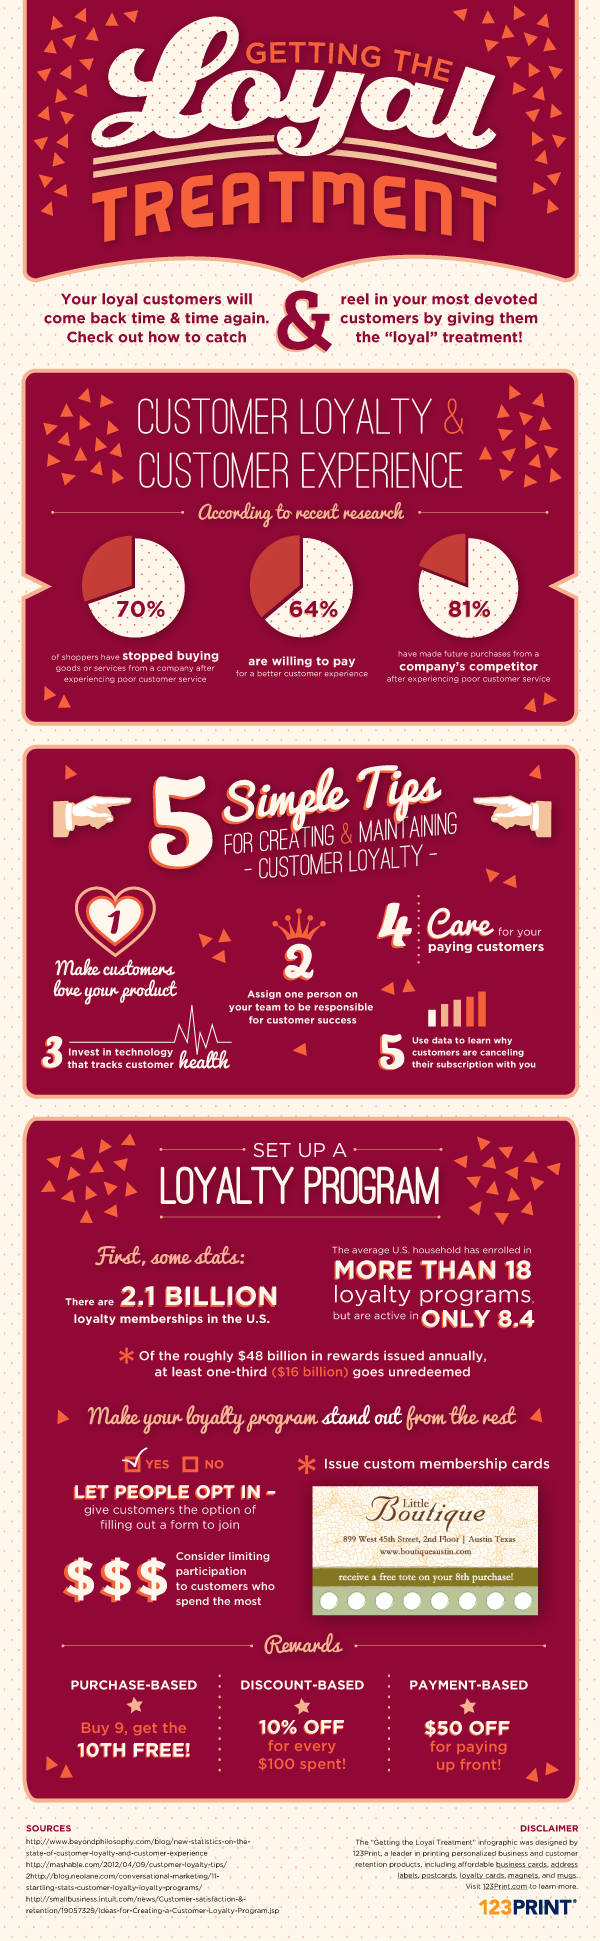 123Print Customer Loyalty Infographic